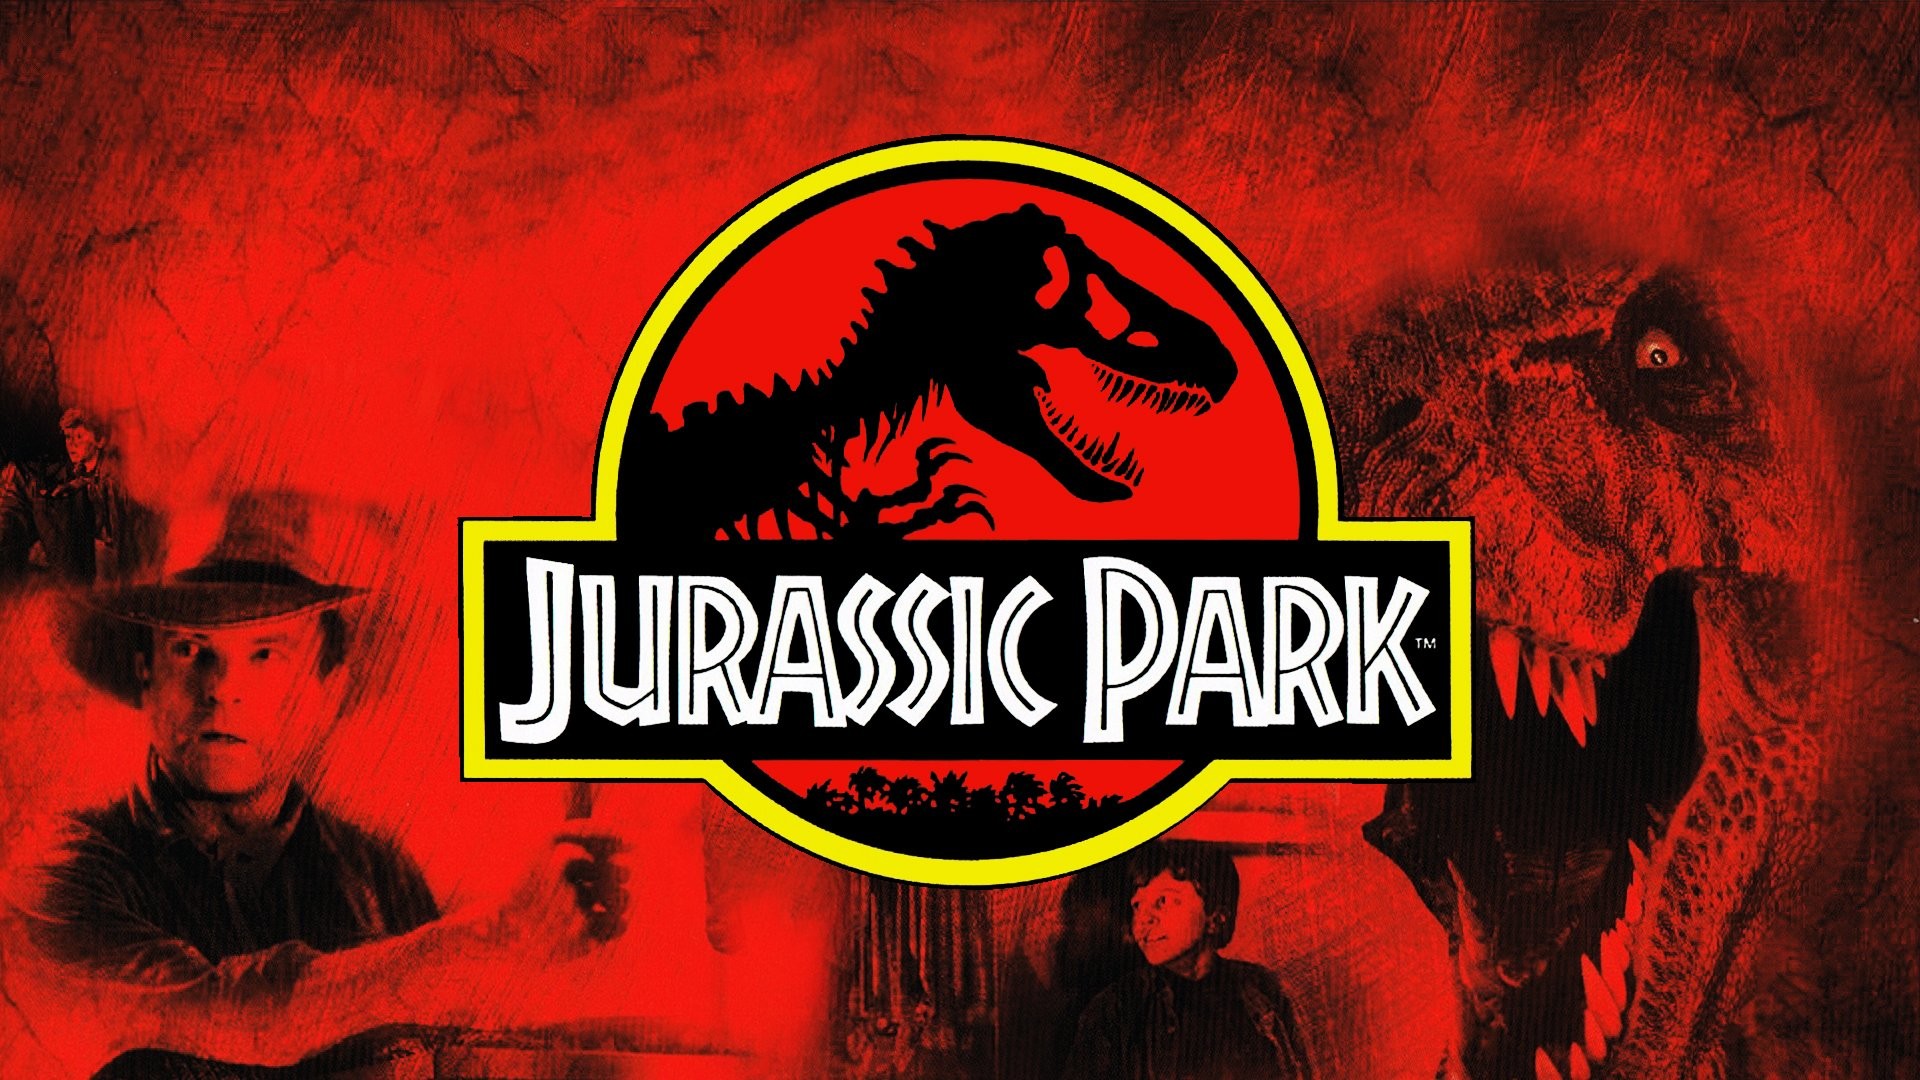 1920x1080 JURASSIC PARK adventure sci-fi fantasy dinosaur movie film poster wallpaper  background